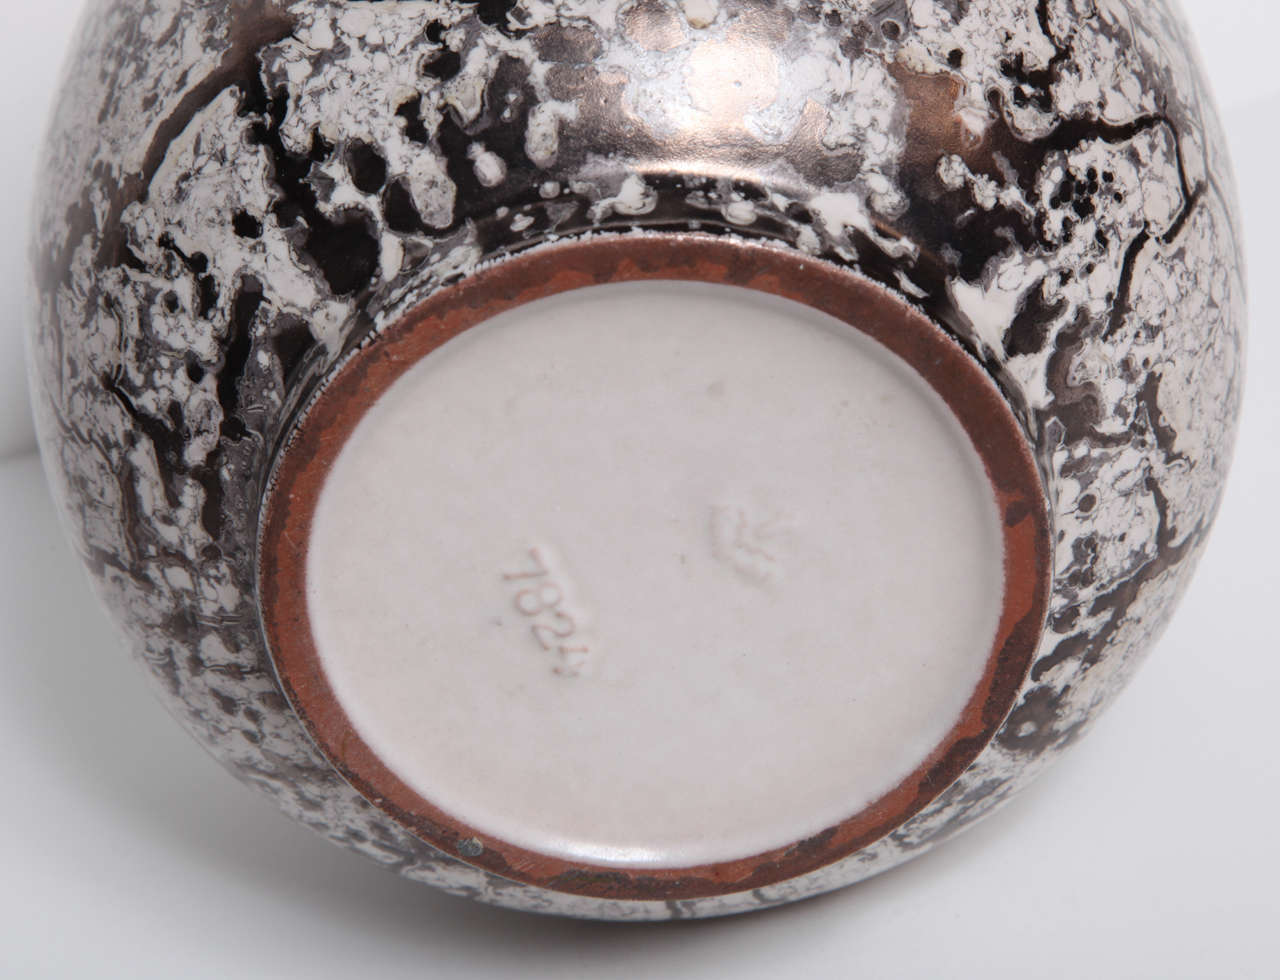 West German Pottery Ceramic Vase with Crackle Glaze 1